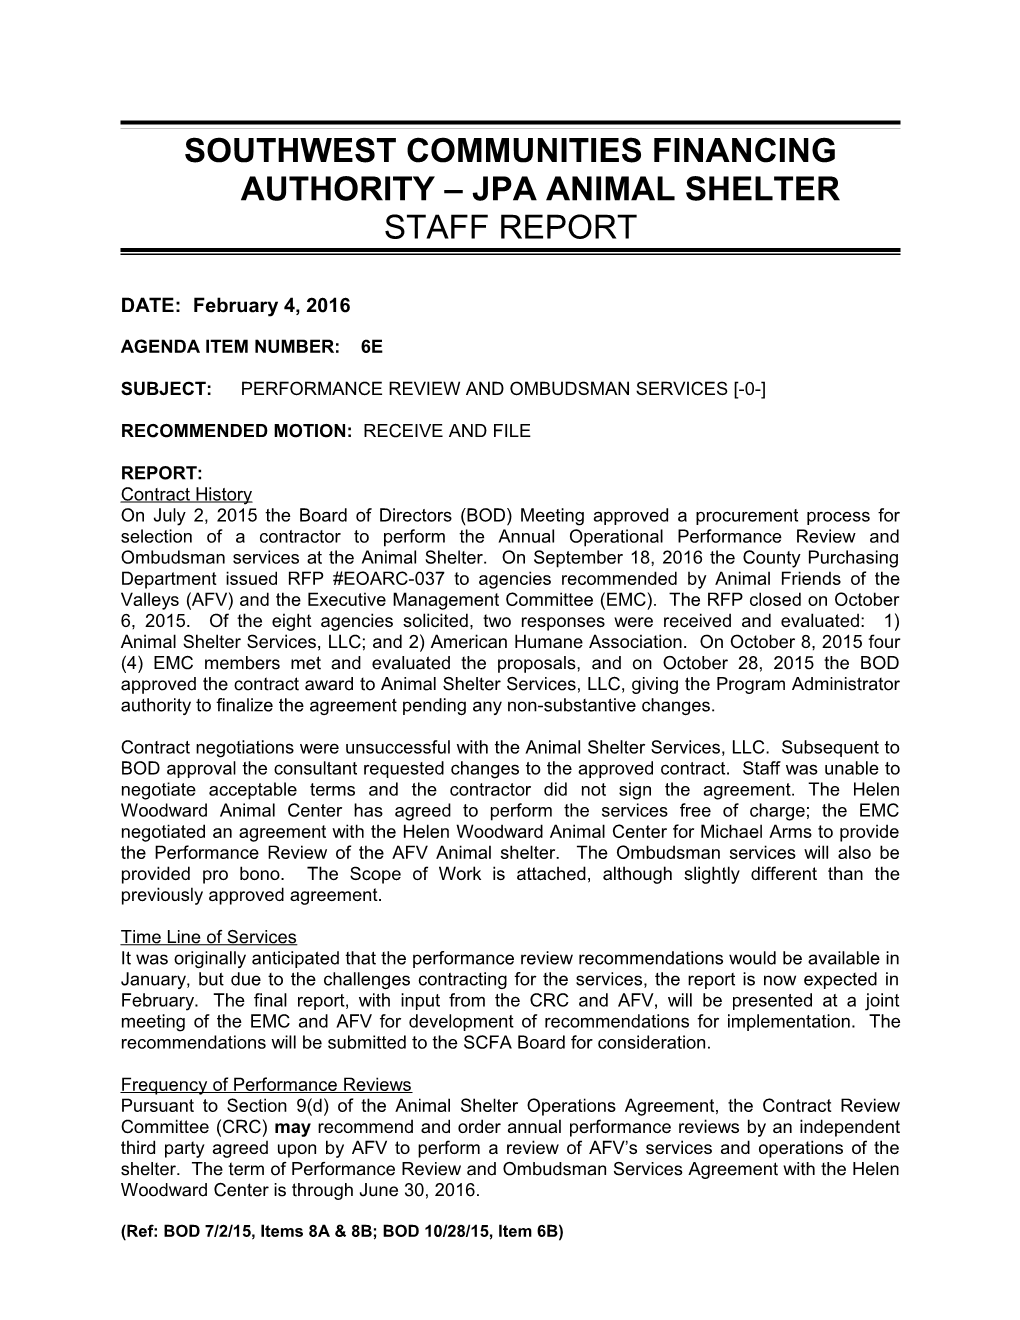 Southwest Communities Financing Authority Jpa Animal Shelter